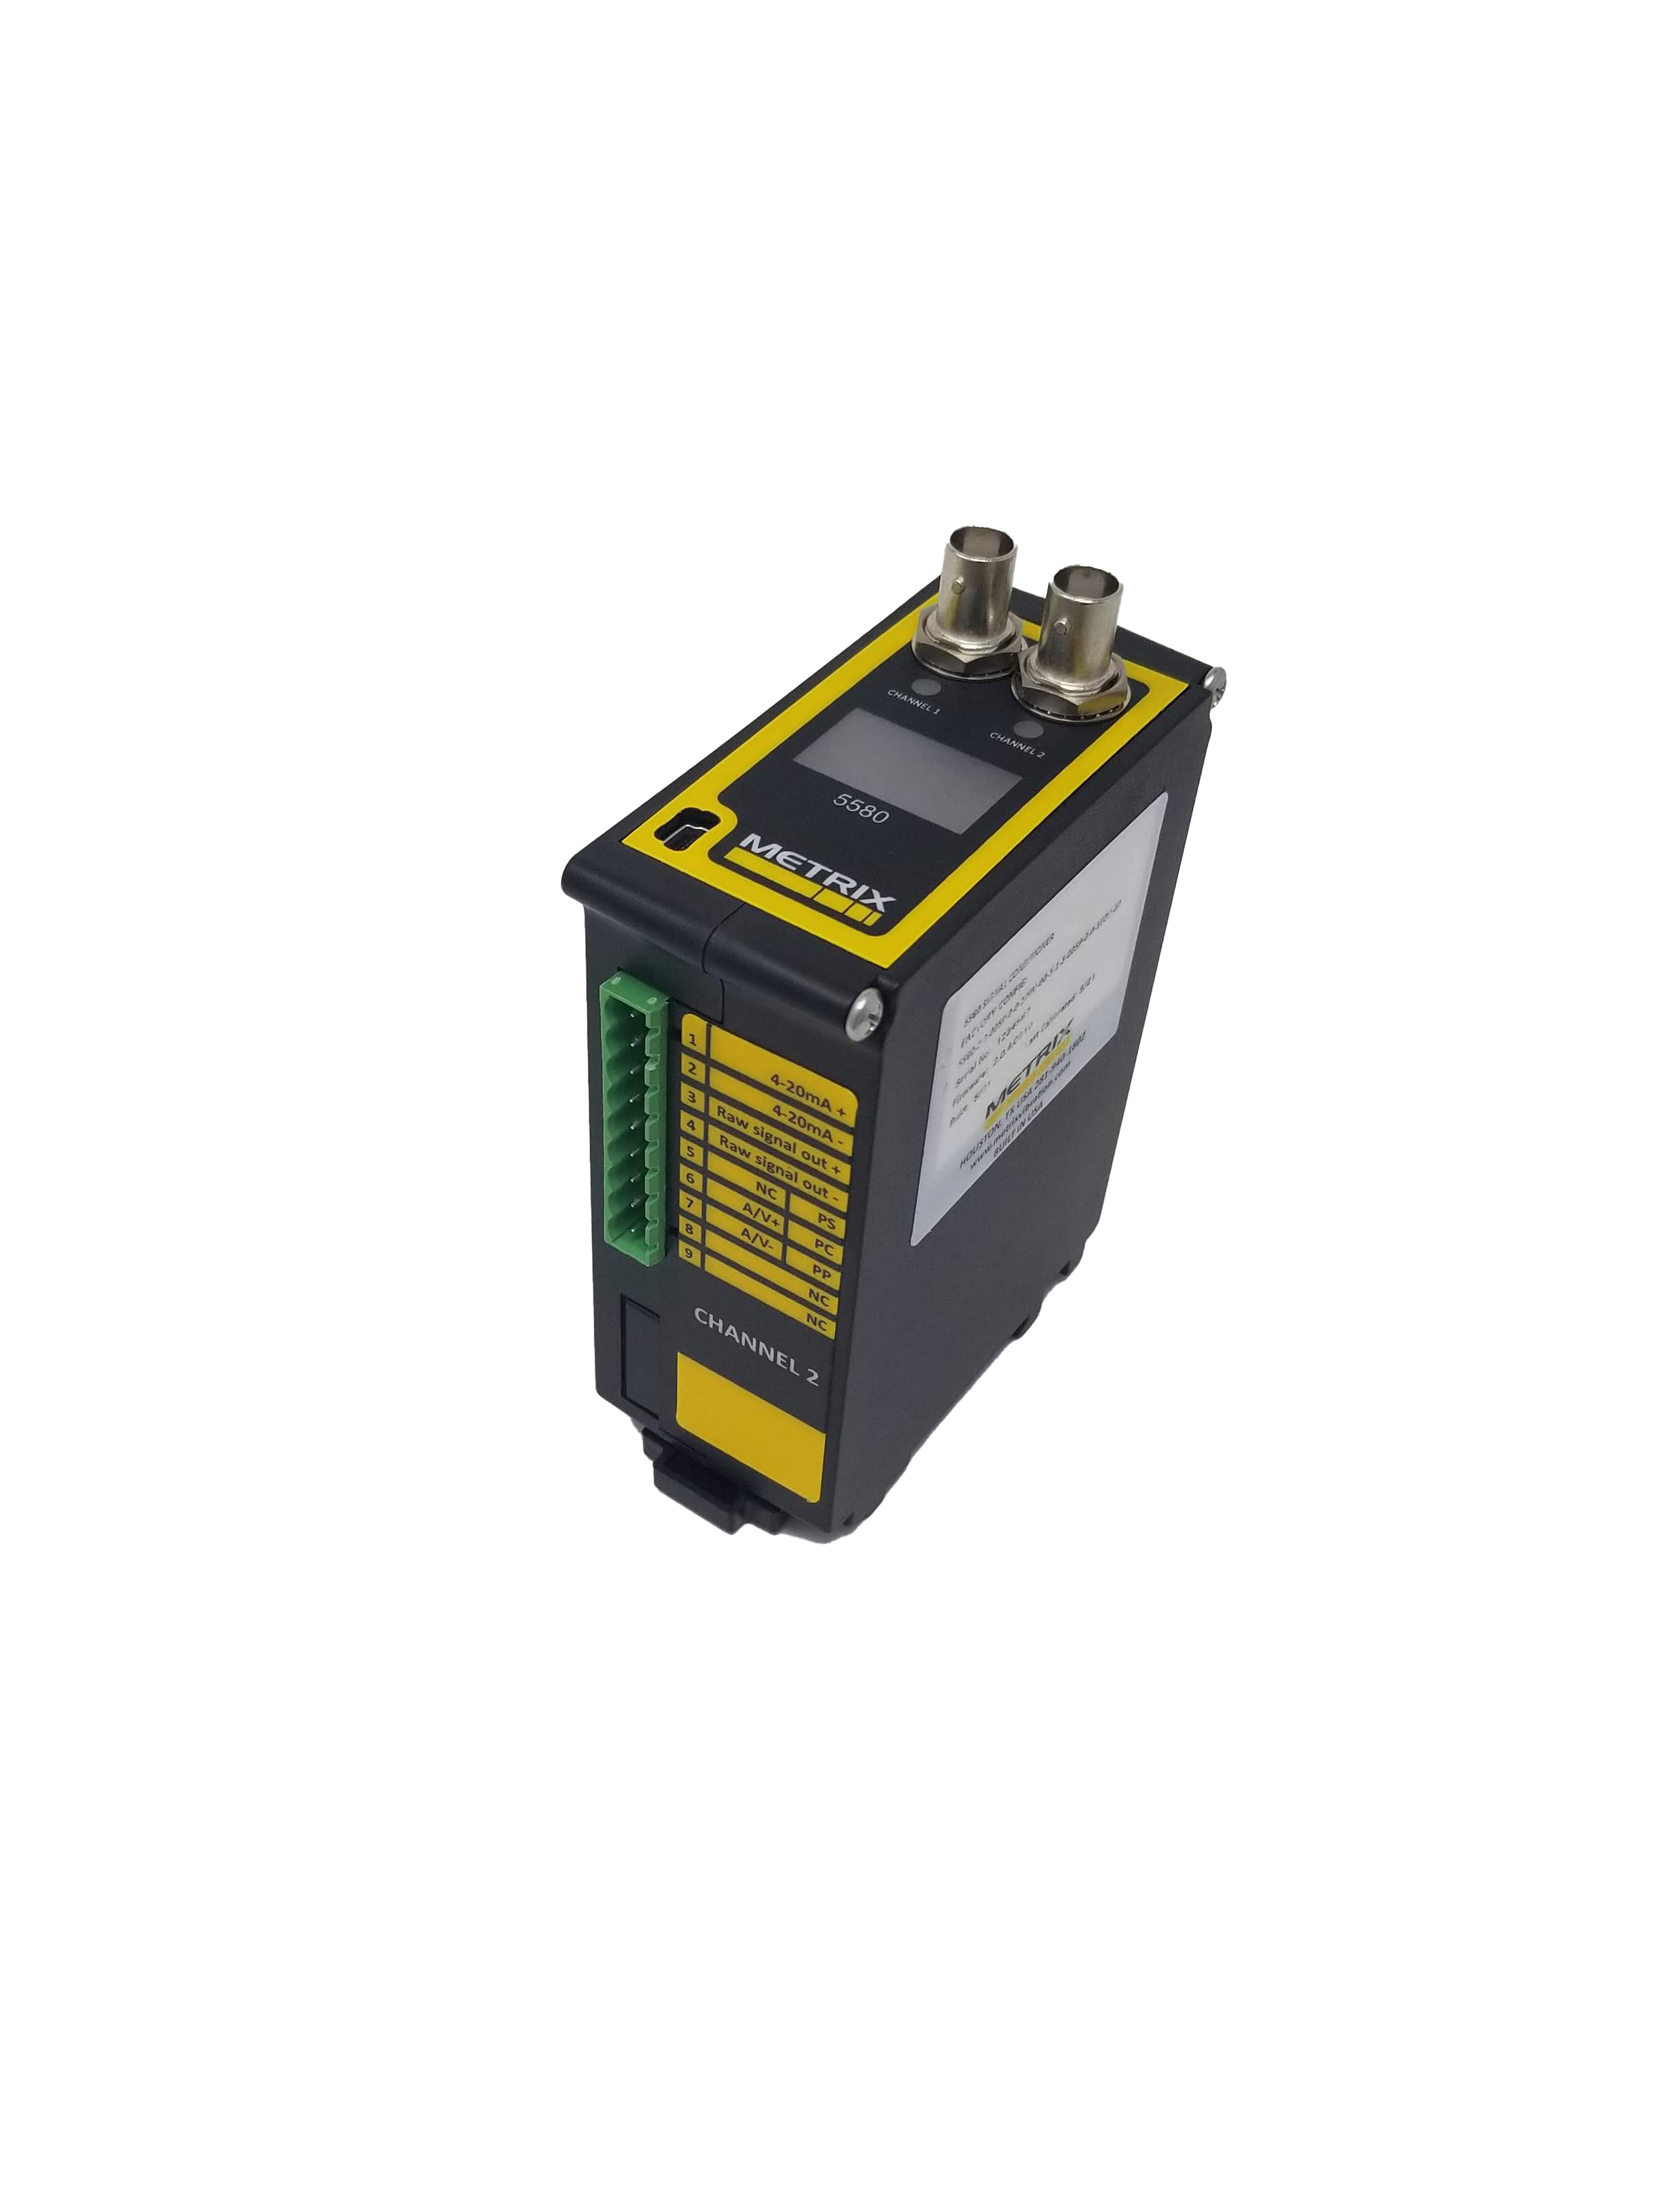 Metrix 5580 Smart Signal Conditioner